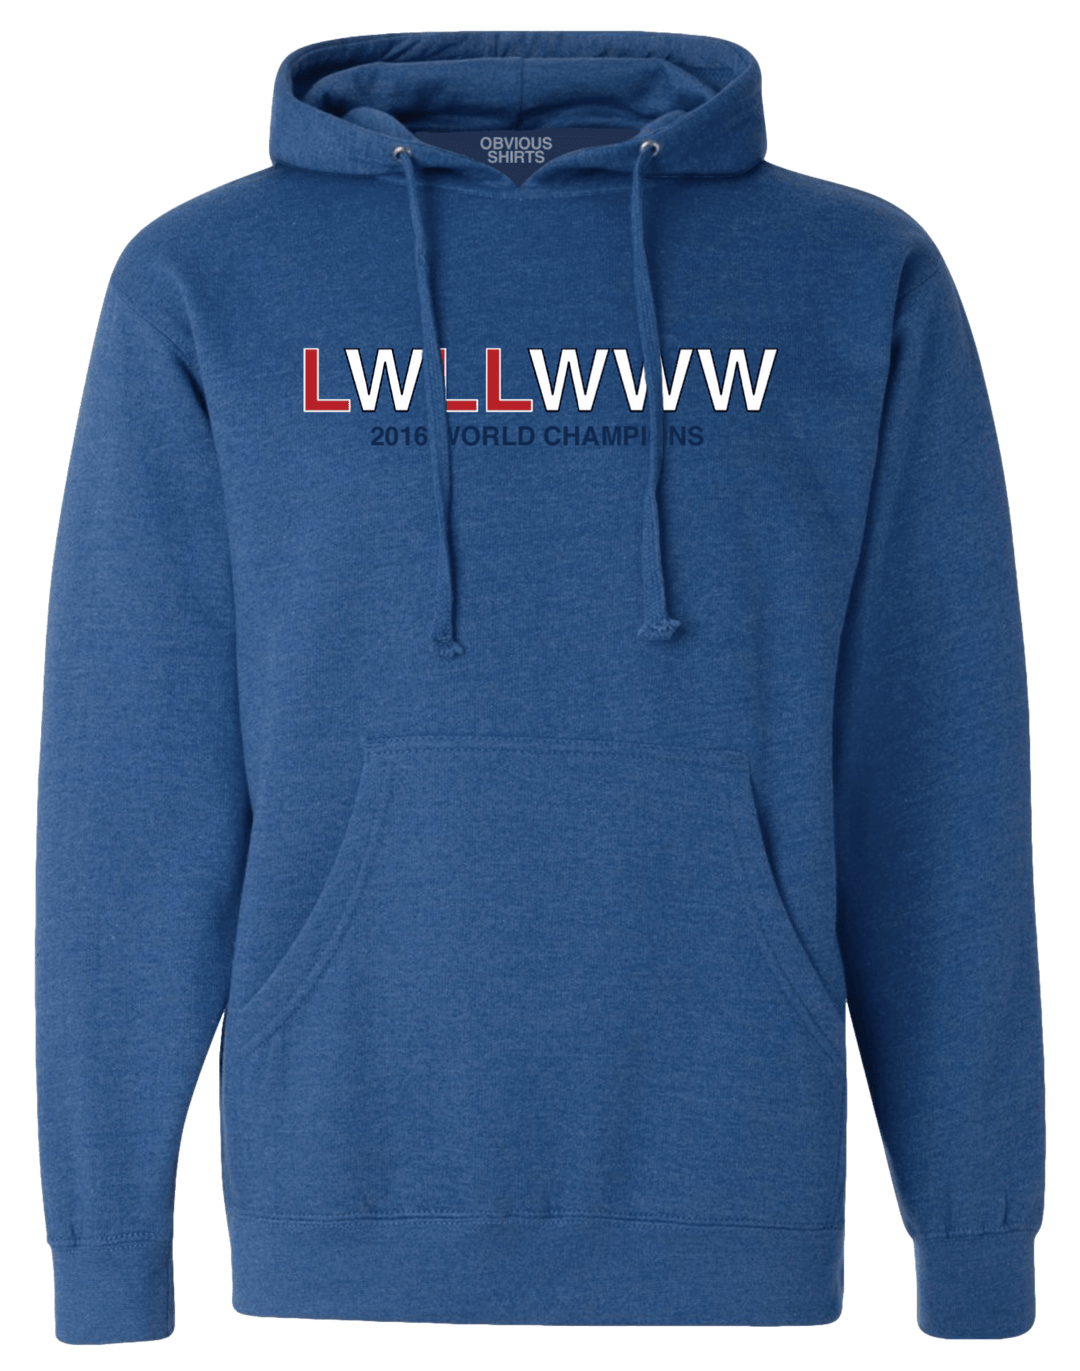 LWLLWWW (HOODED SWEATSHIRT) - OBVIOUS SHIRTS